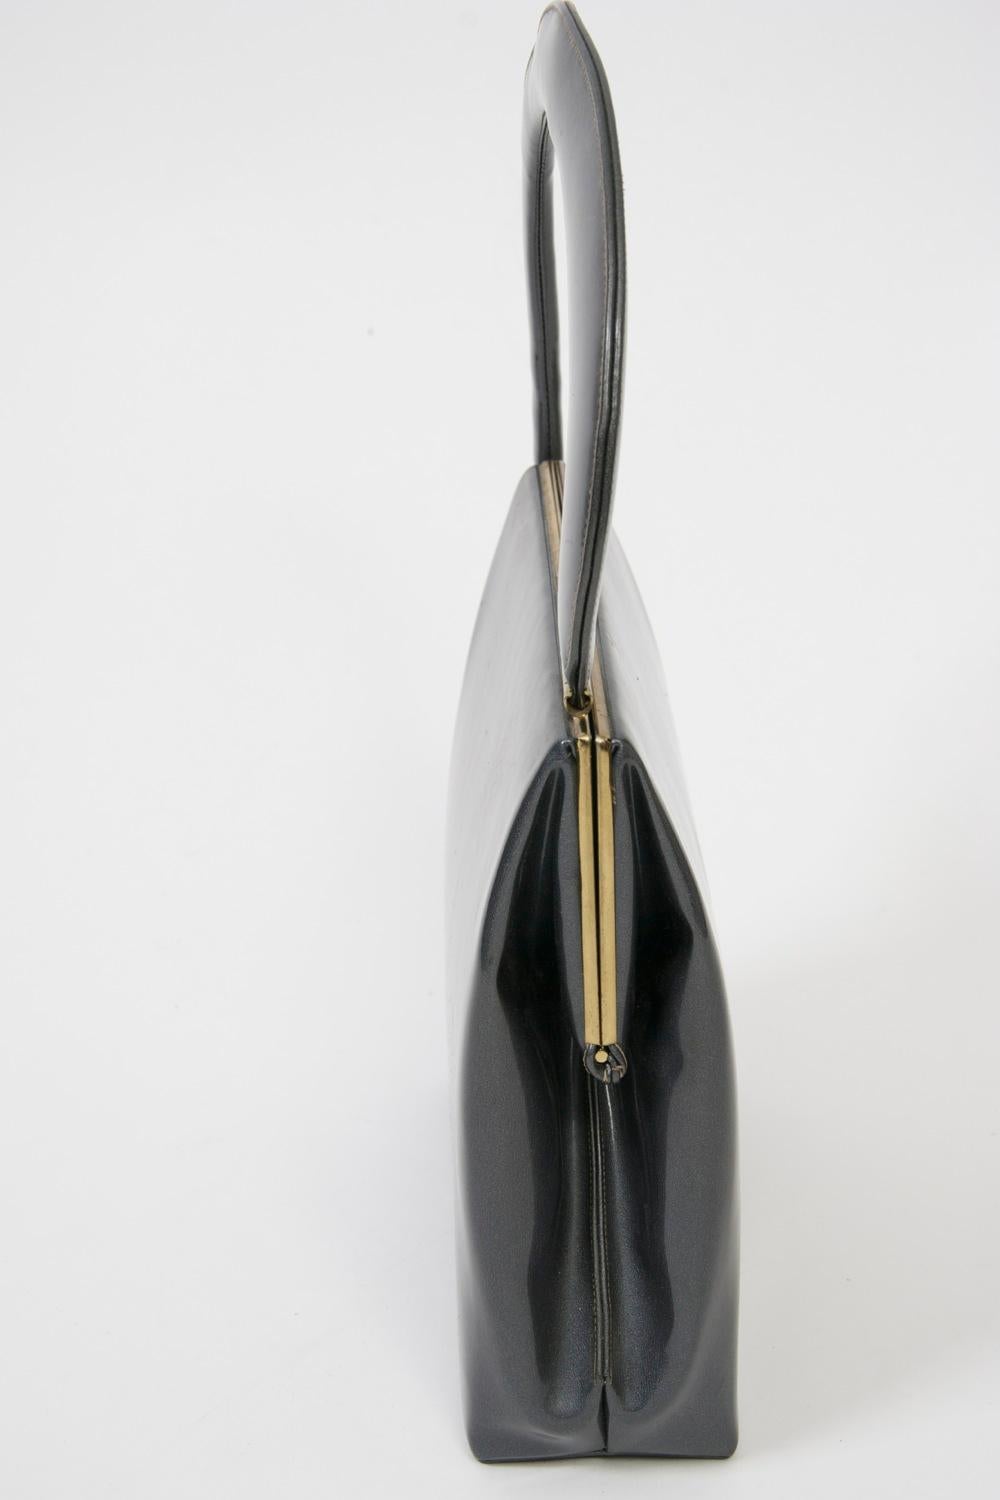 1960s Gunmetal Handbag In Good Condition For Sale In Alford, MA